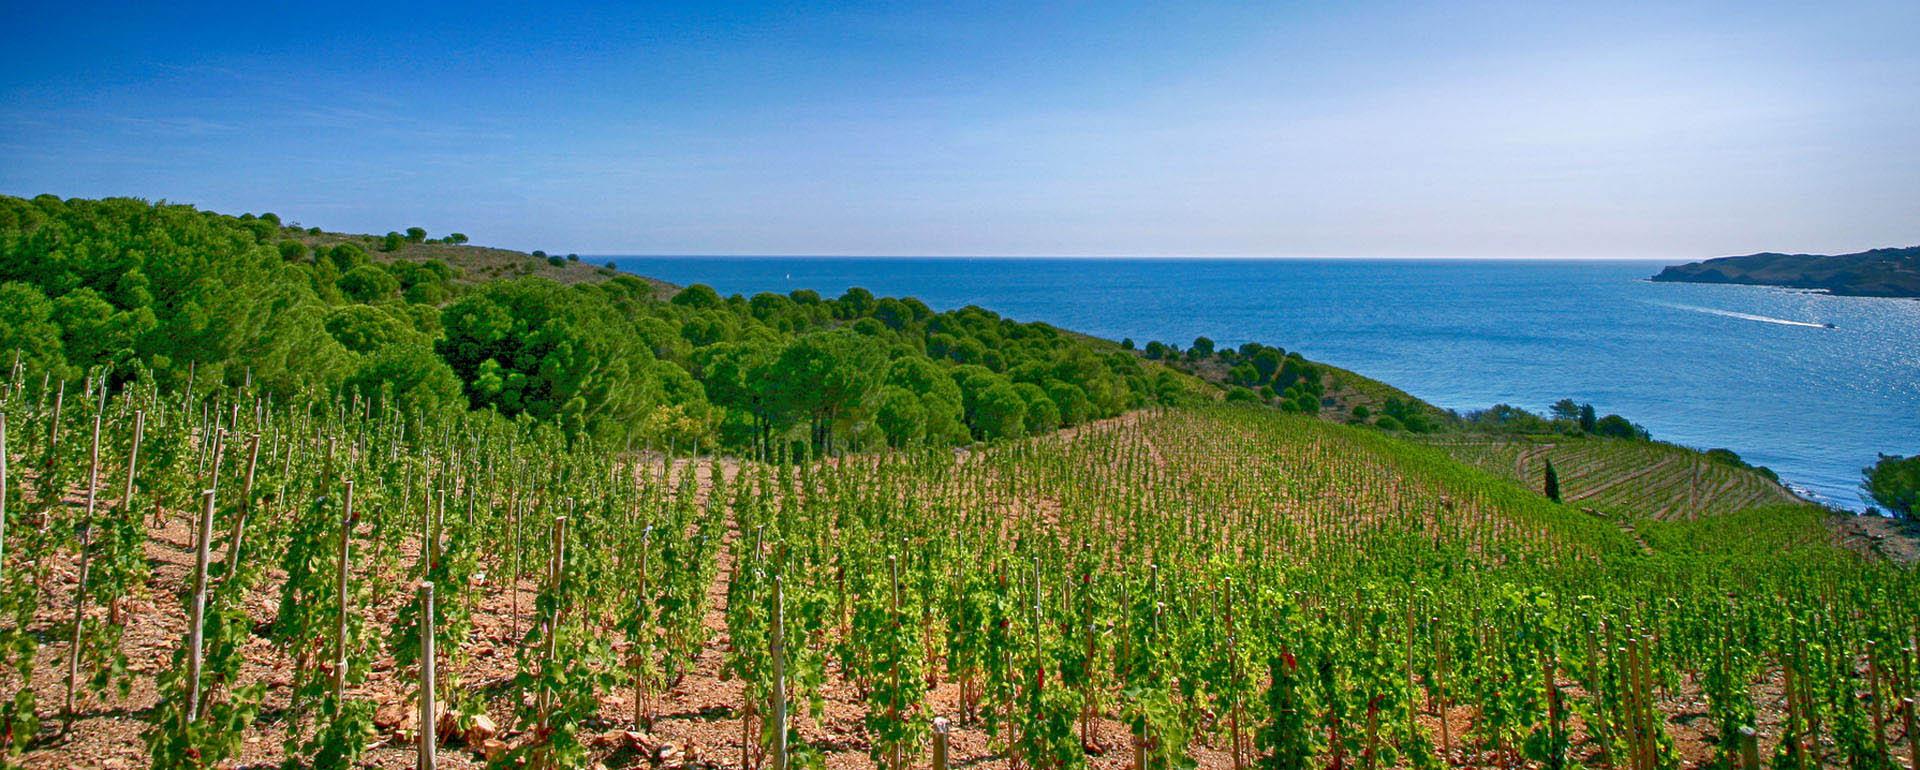 Vignoble de Banuyls-Collioure